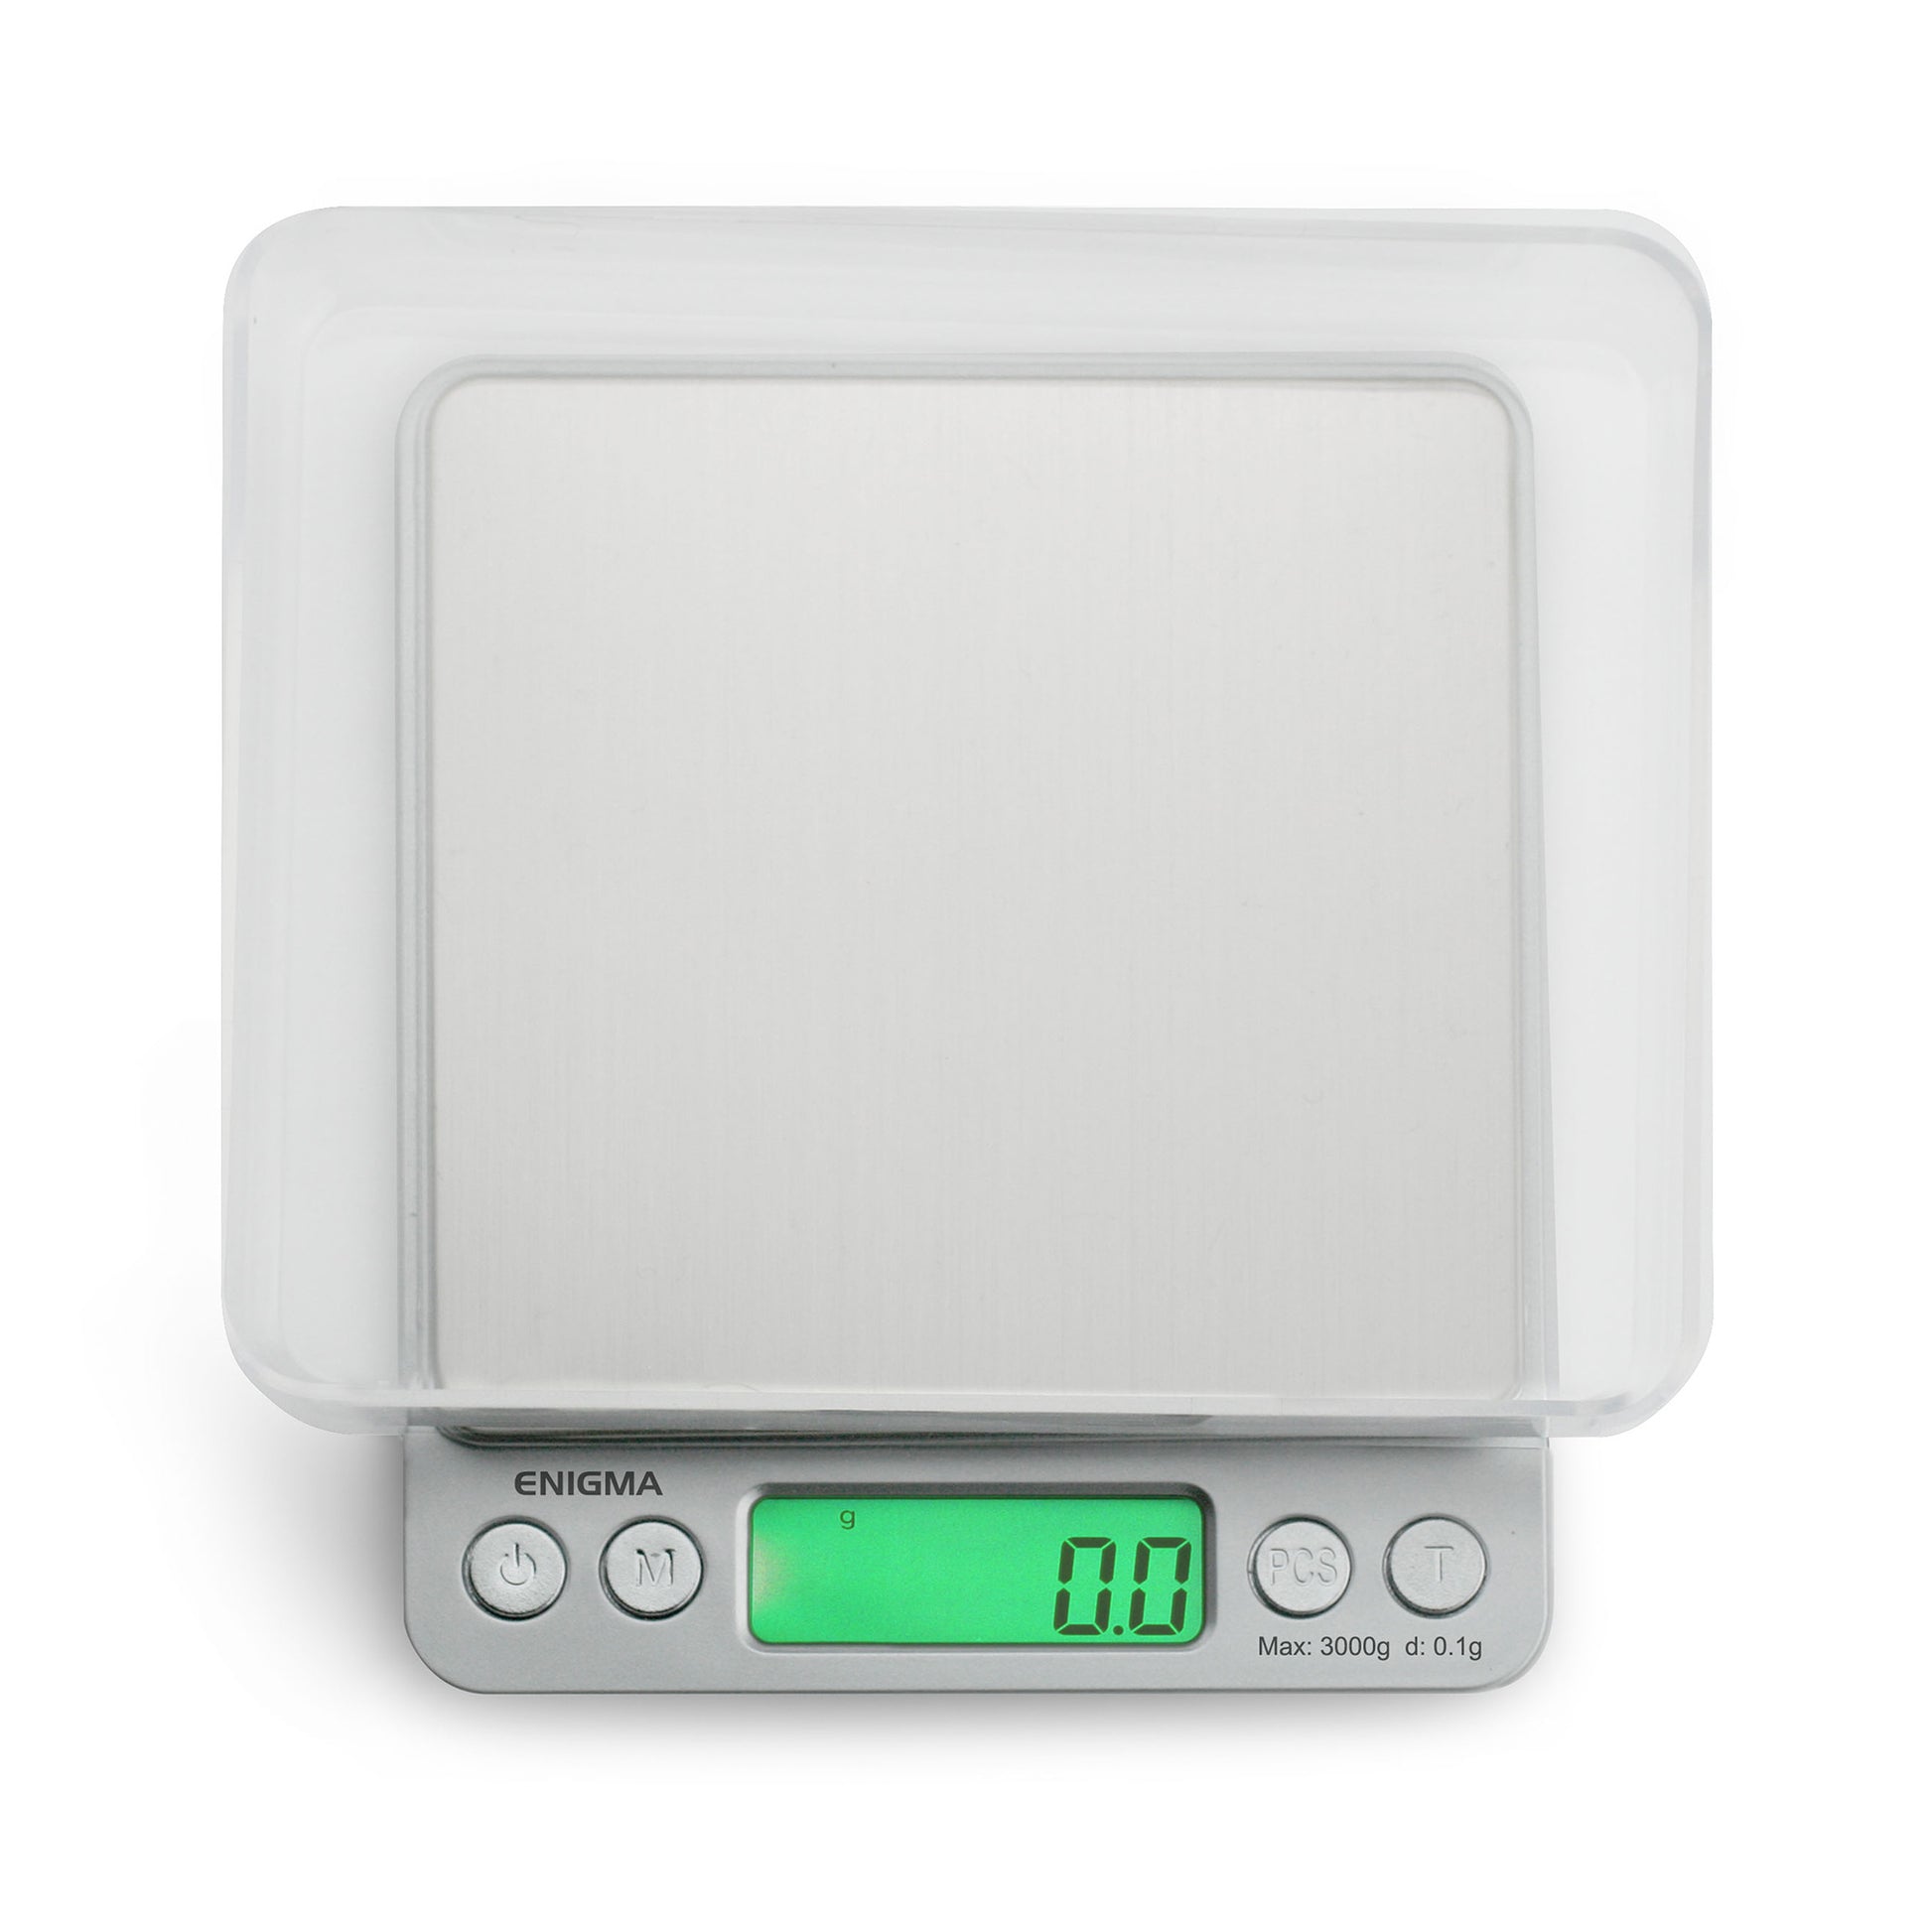 Digital Kitchen Scale 3000g / 0.1g ; Mini Pocket Jewelry Scale